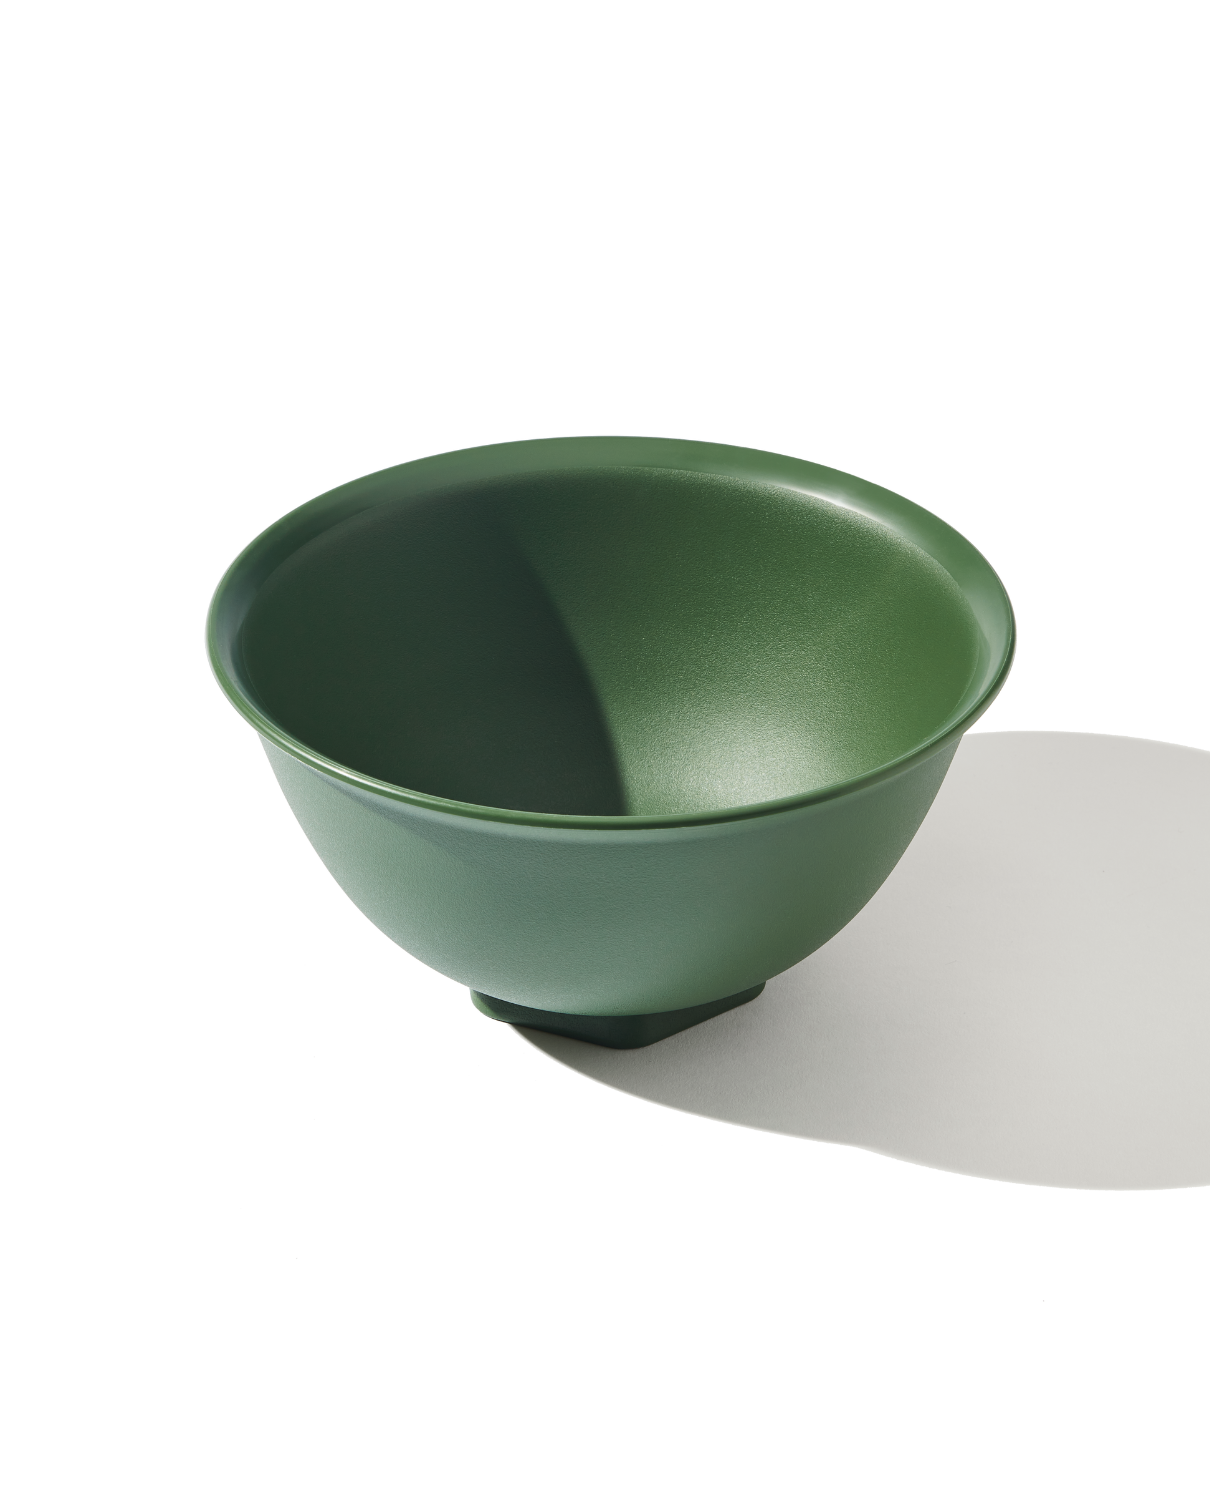 60 pieces Good Cook 7 Quart Plastic Bowl - Plastic Bowls and Plates - at 